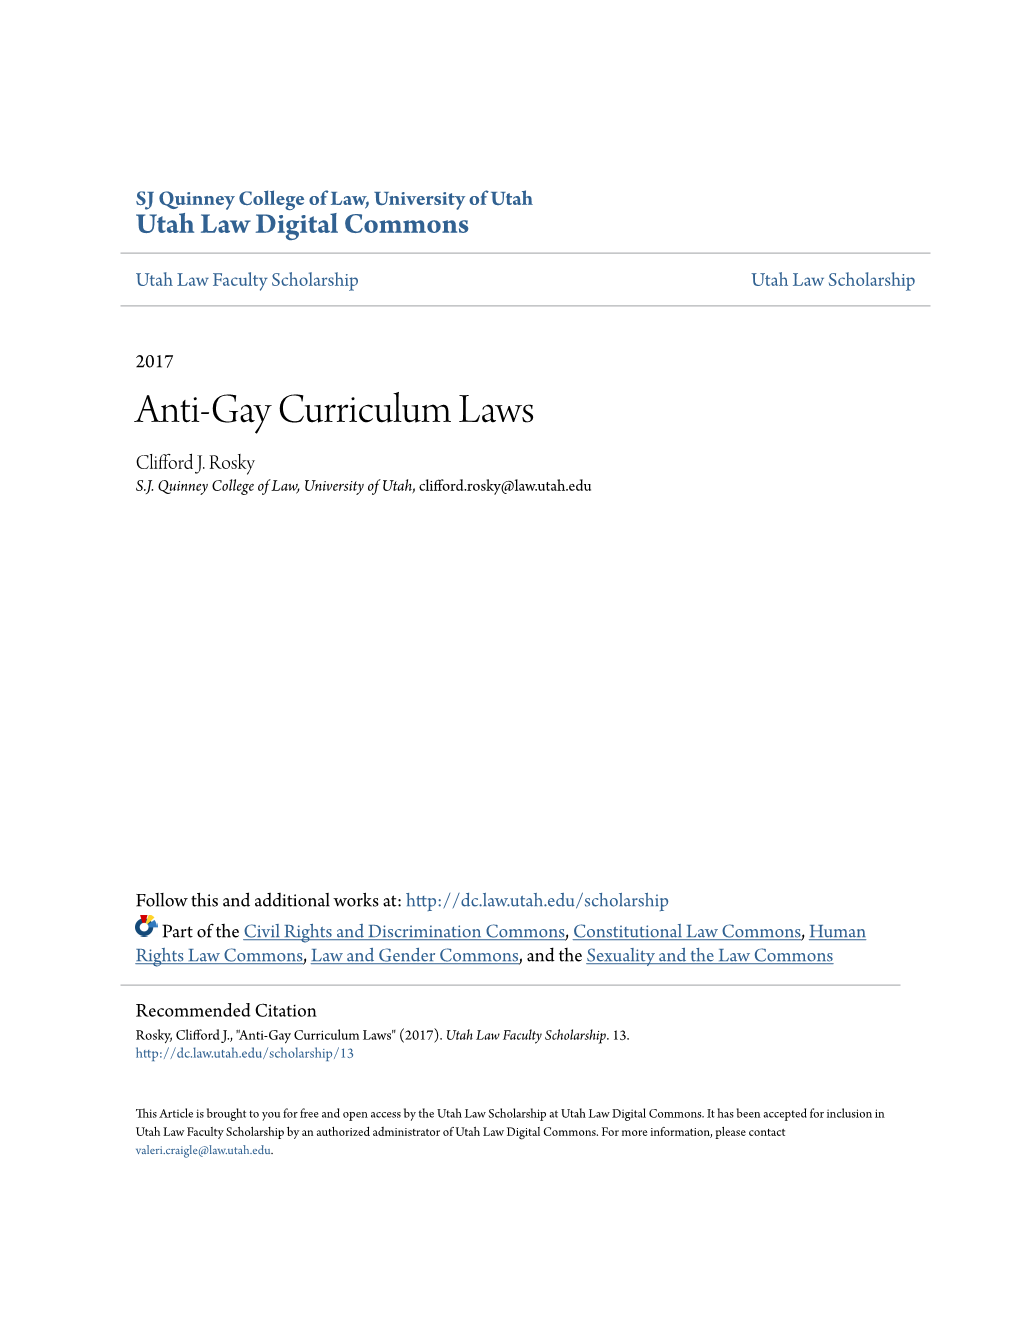 Anti-Gay Curriculum Laws Clifford J